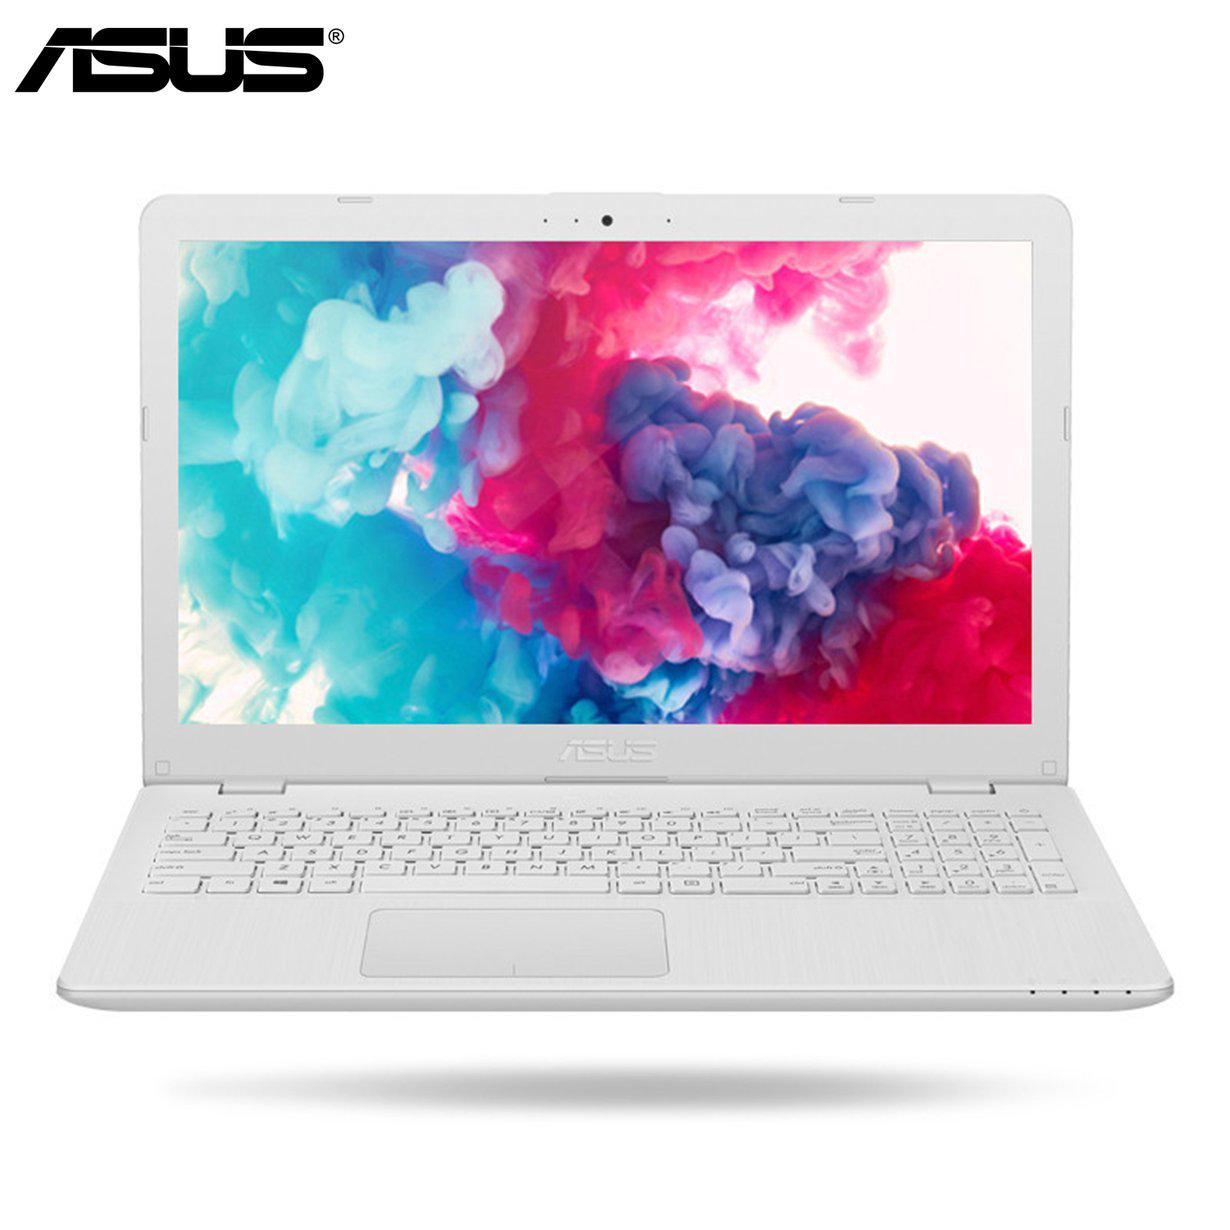 Asus FL8000UN8550 Gaming Laptop 4GB RAM 1TB ROM Computer 15.6" Ultrathin HD PC